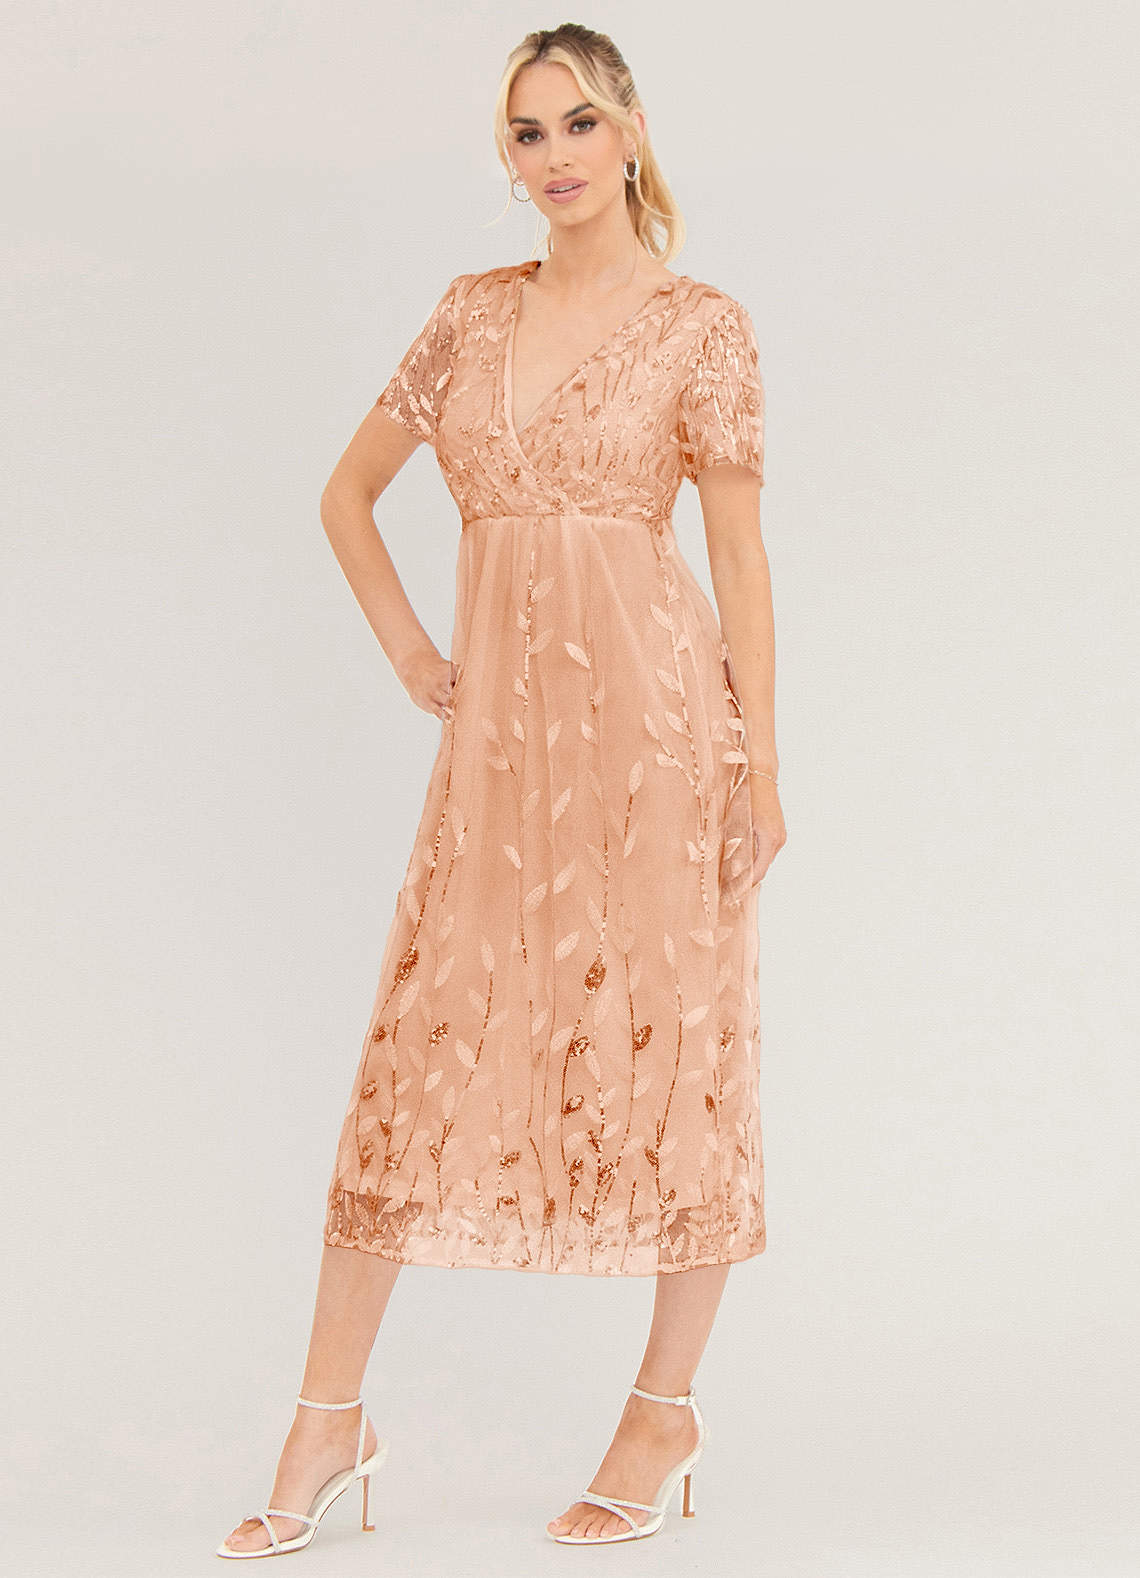 Light Up Beauty Rose Gold Floral Sequin Short Sleeve Maxi Dress image1